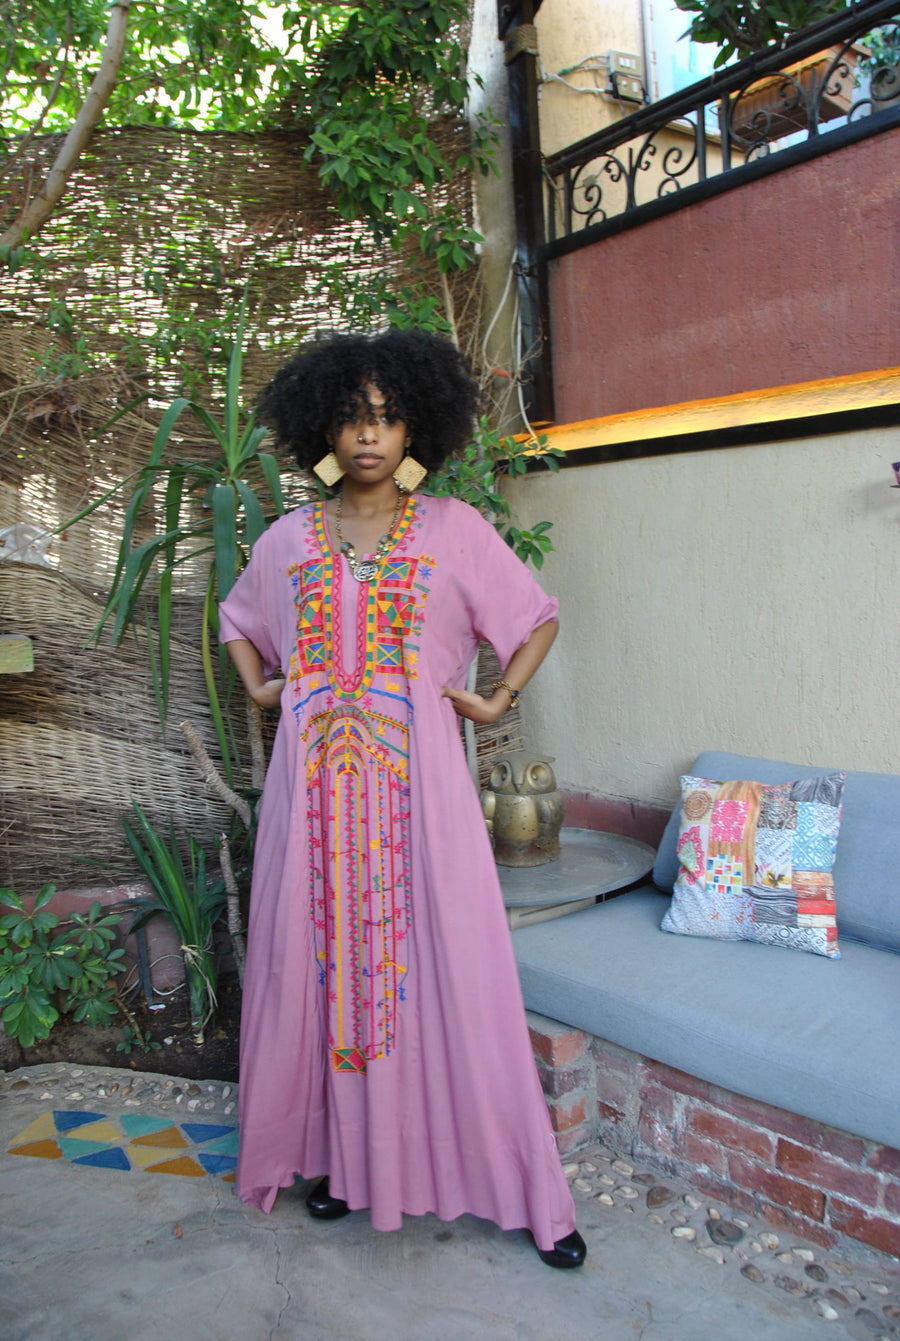 Siwa Multicolor embroidered Kaftan dress, Cotton Kaftan, caftans for women, Summer Kaftan, Embroidered kaftan, caftans, Egyptian